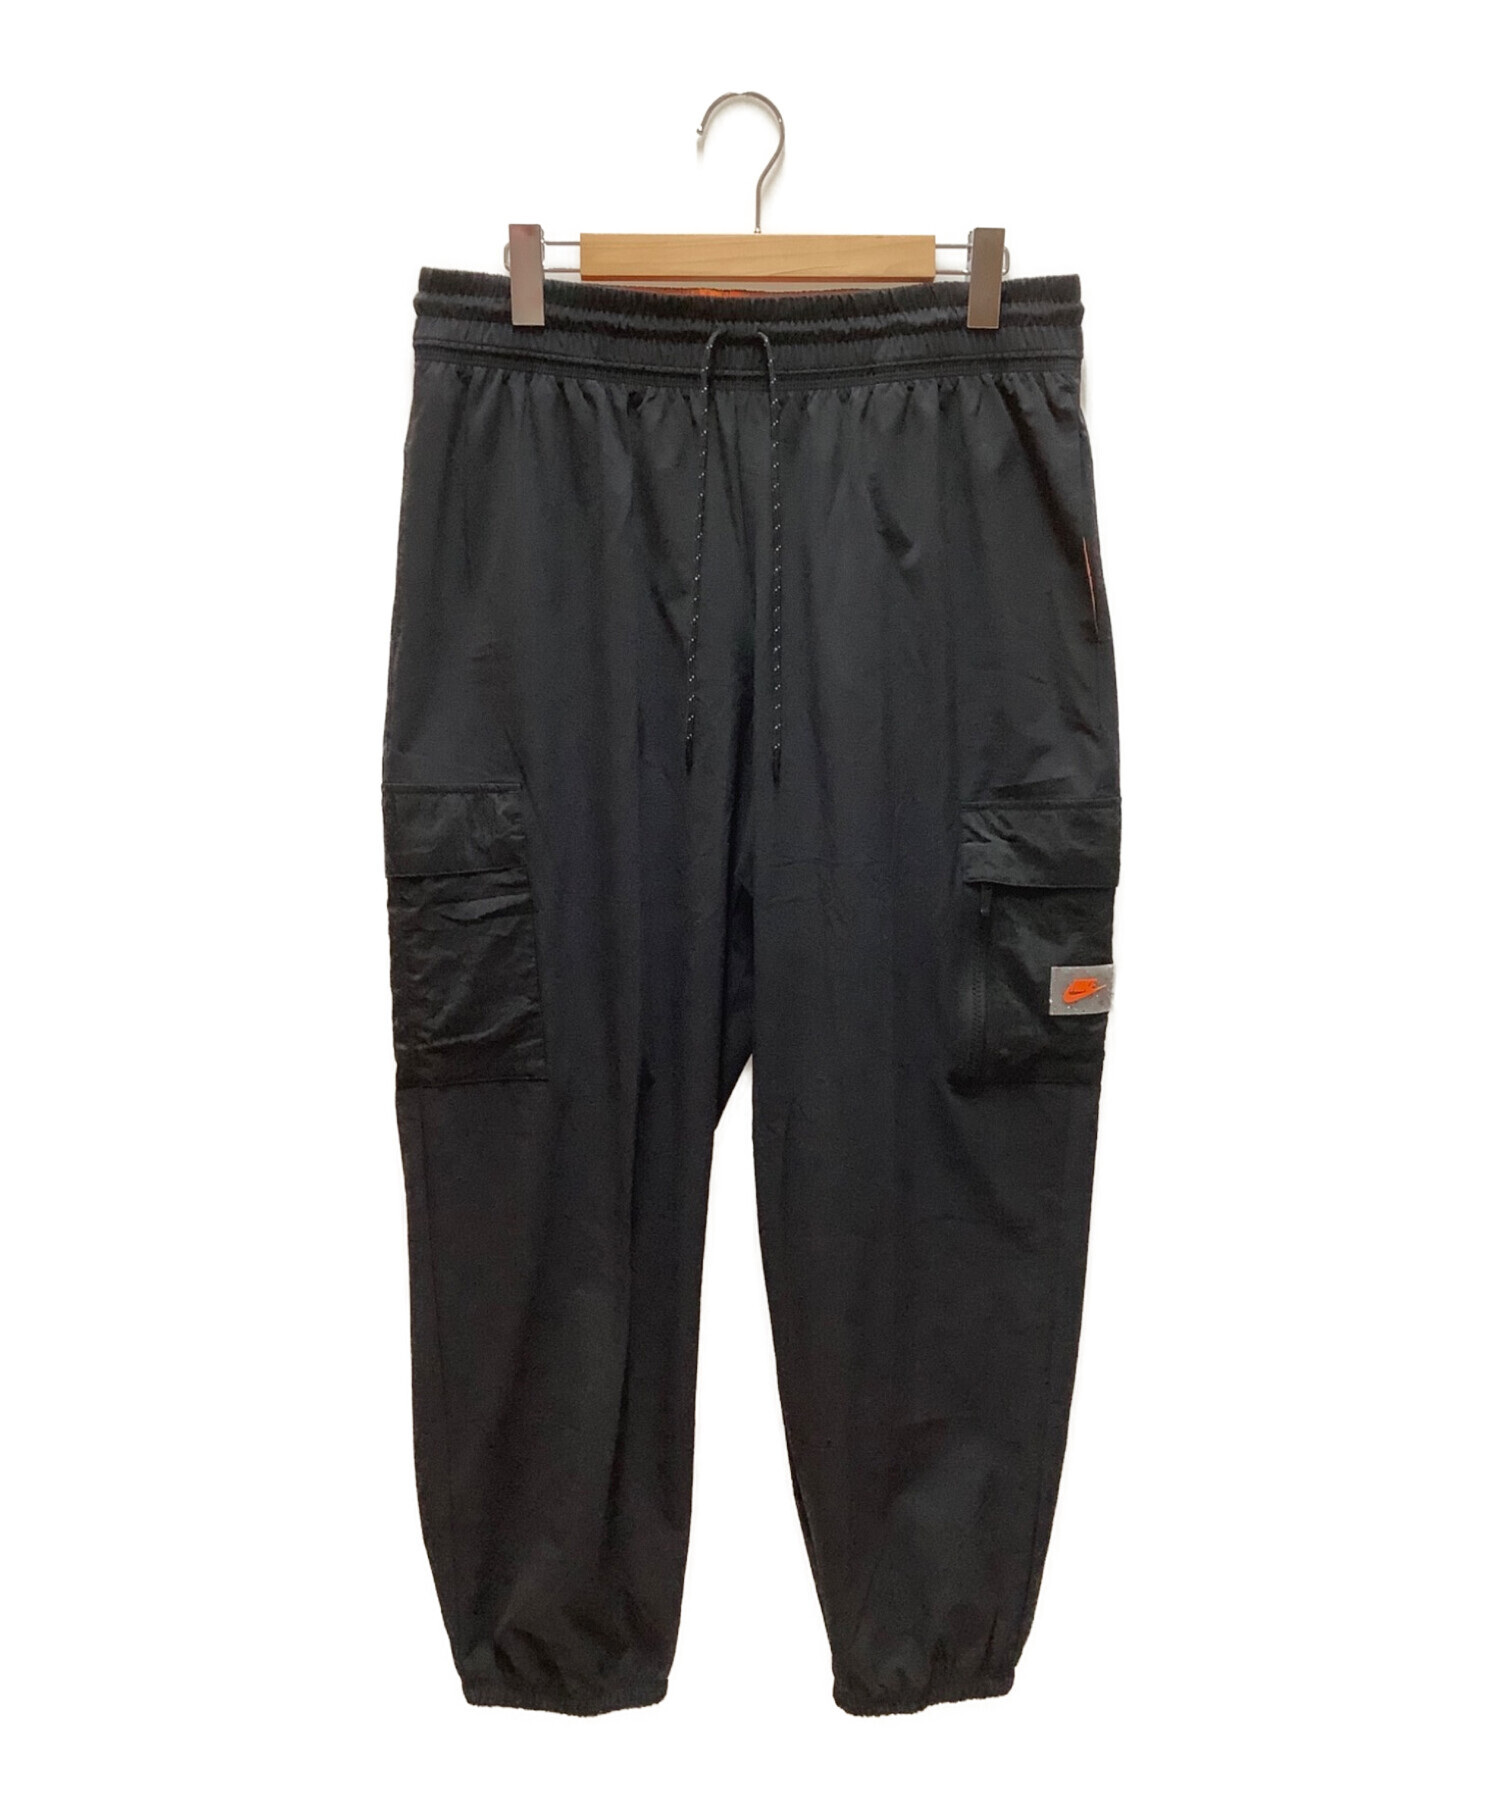 NIKE (ナイキ) Women's Sports Utility Woven Cargo Pants ブラック×オレンジ サイズ:L